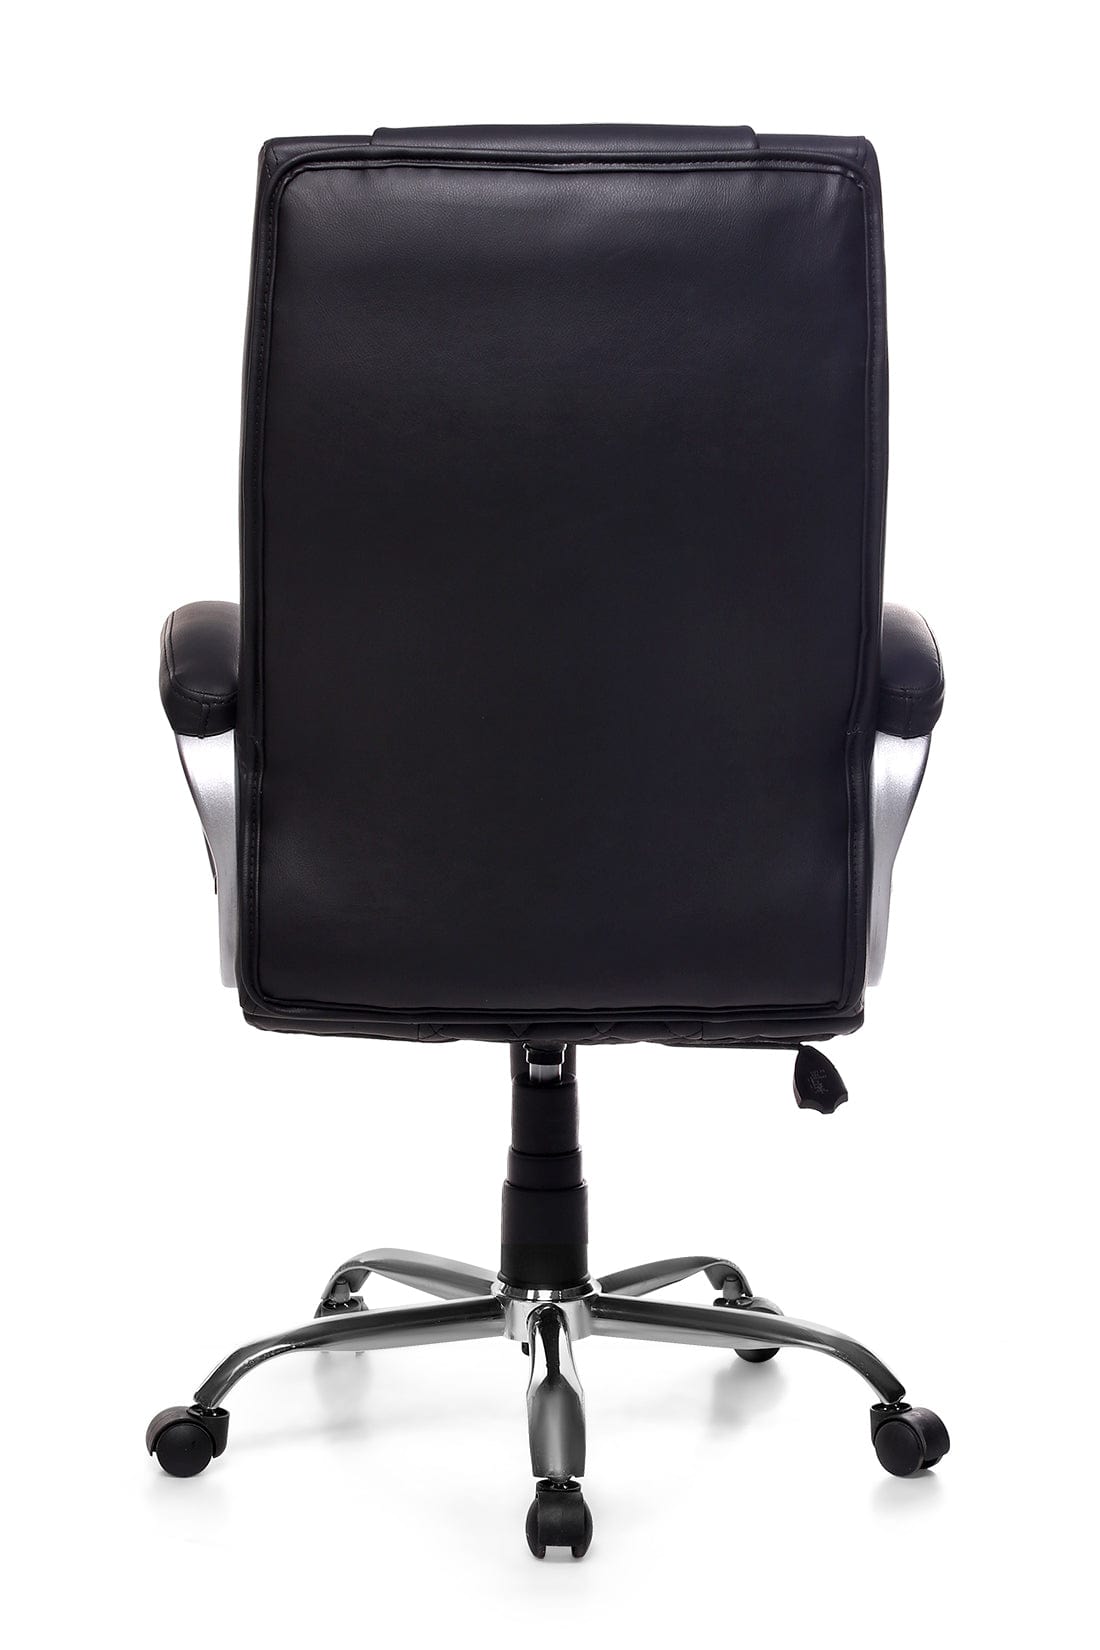 Adiko Sleek Executive Revolving Office Chair in Black